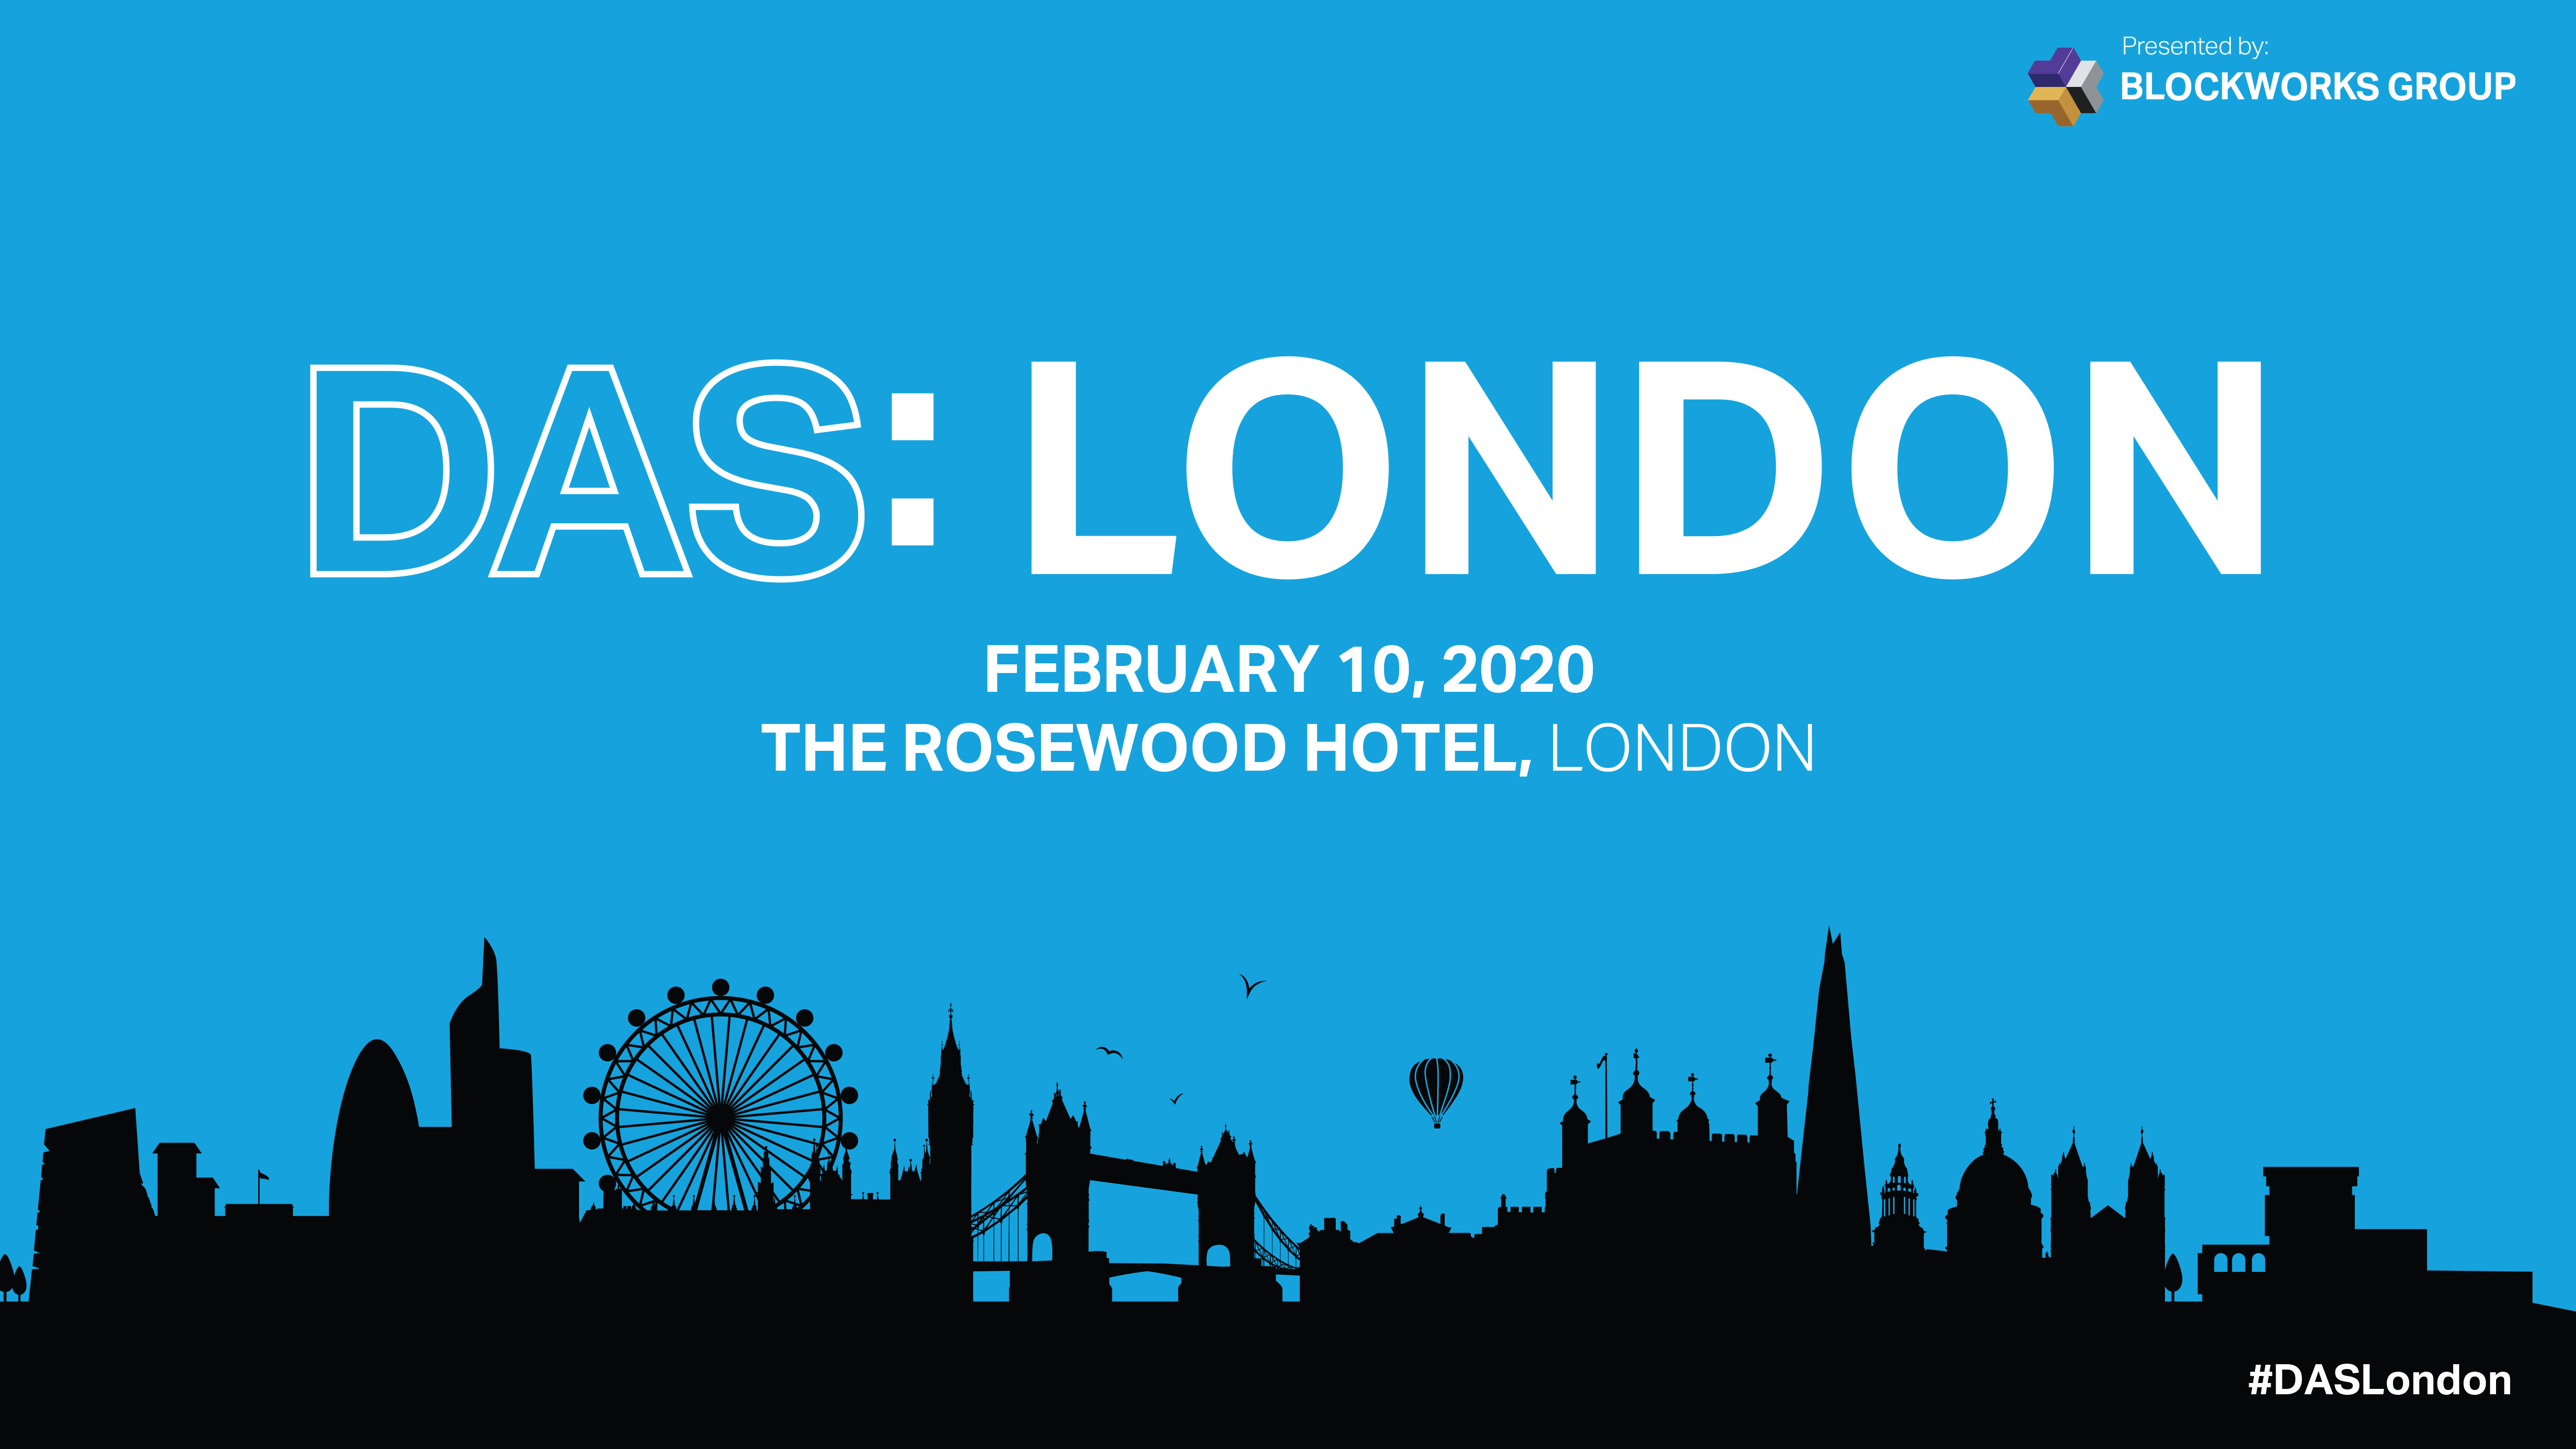 DAS: London 2020 organized by BlockWorks Group